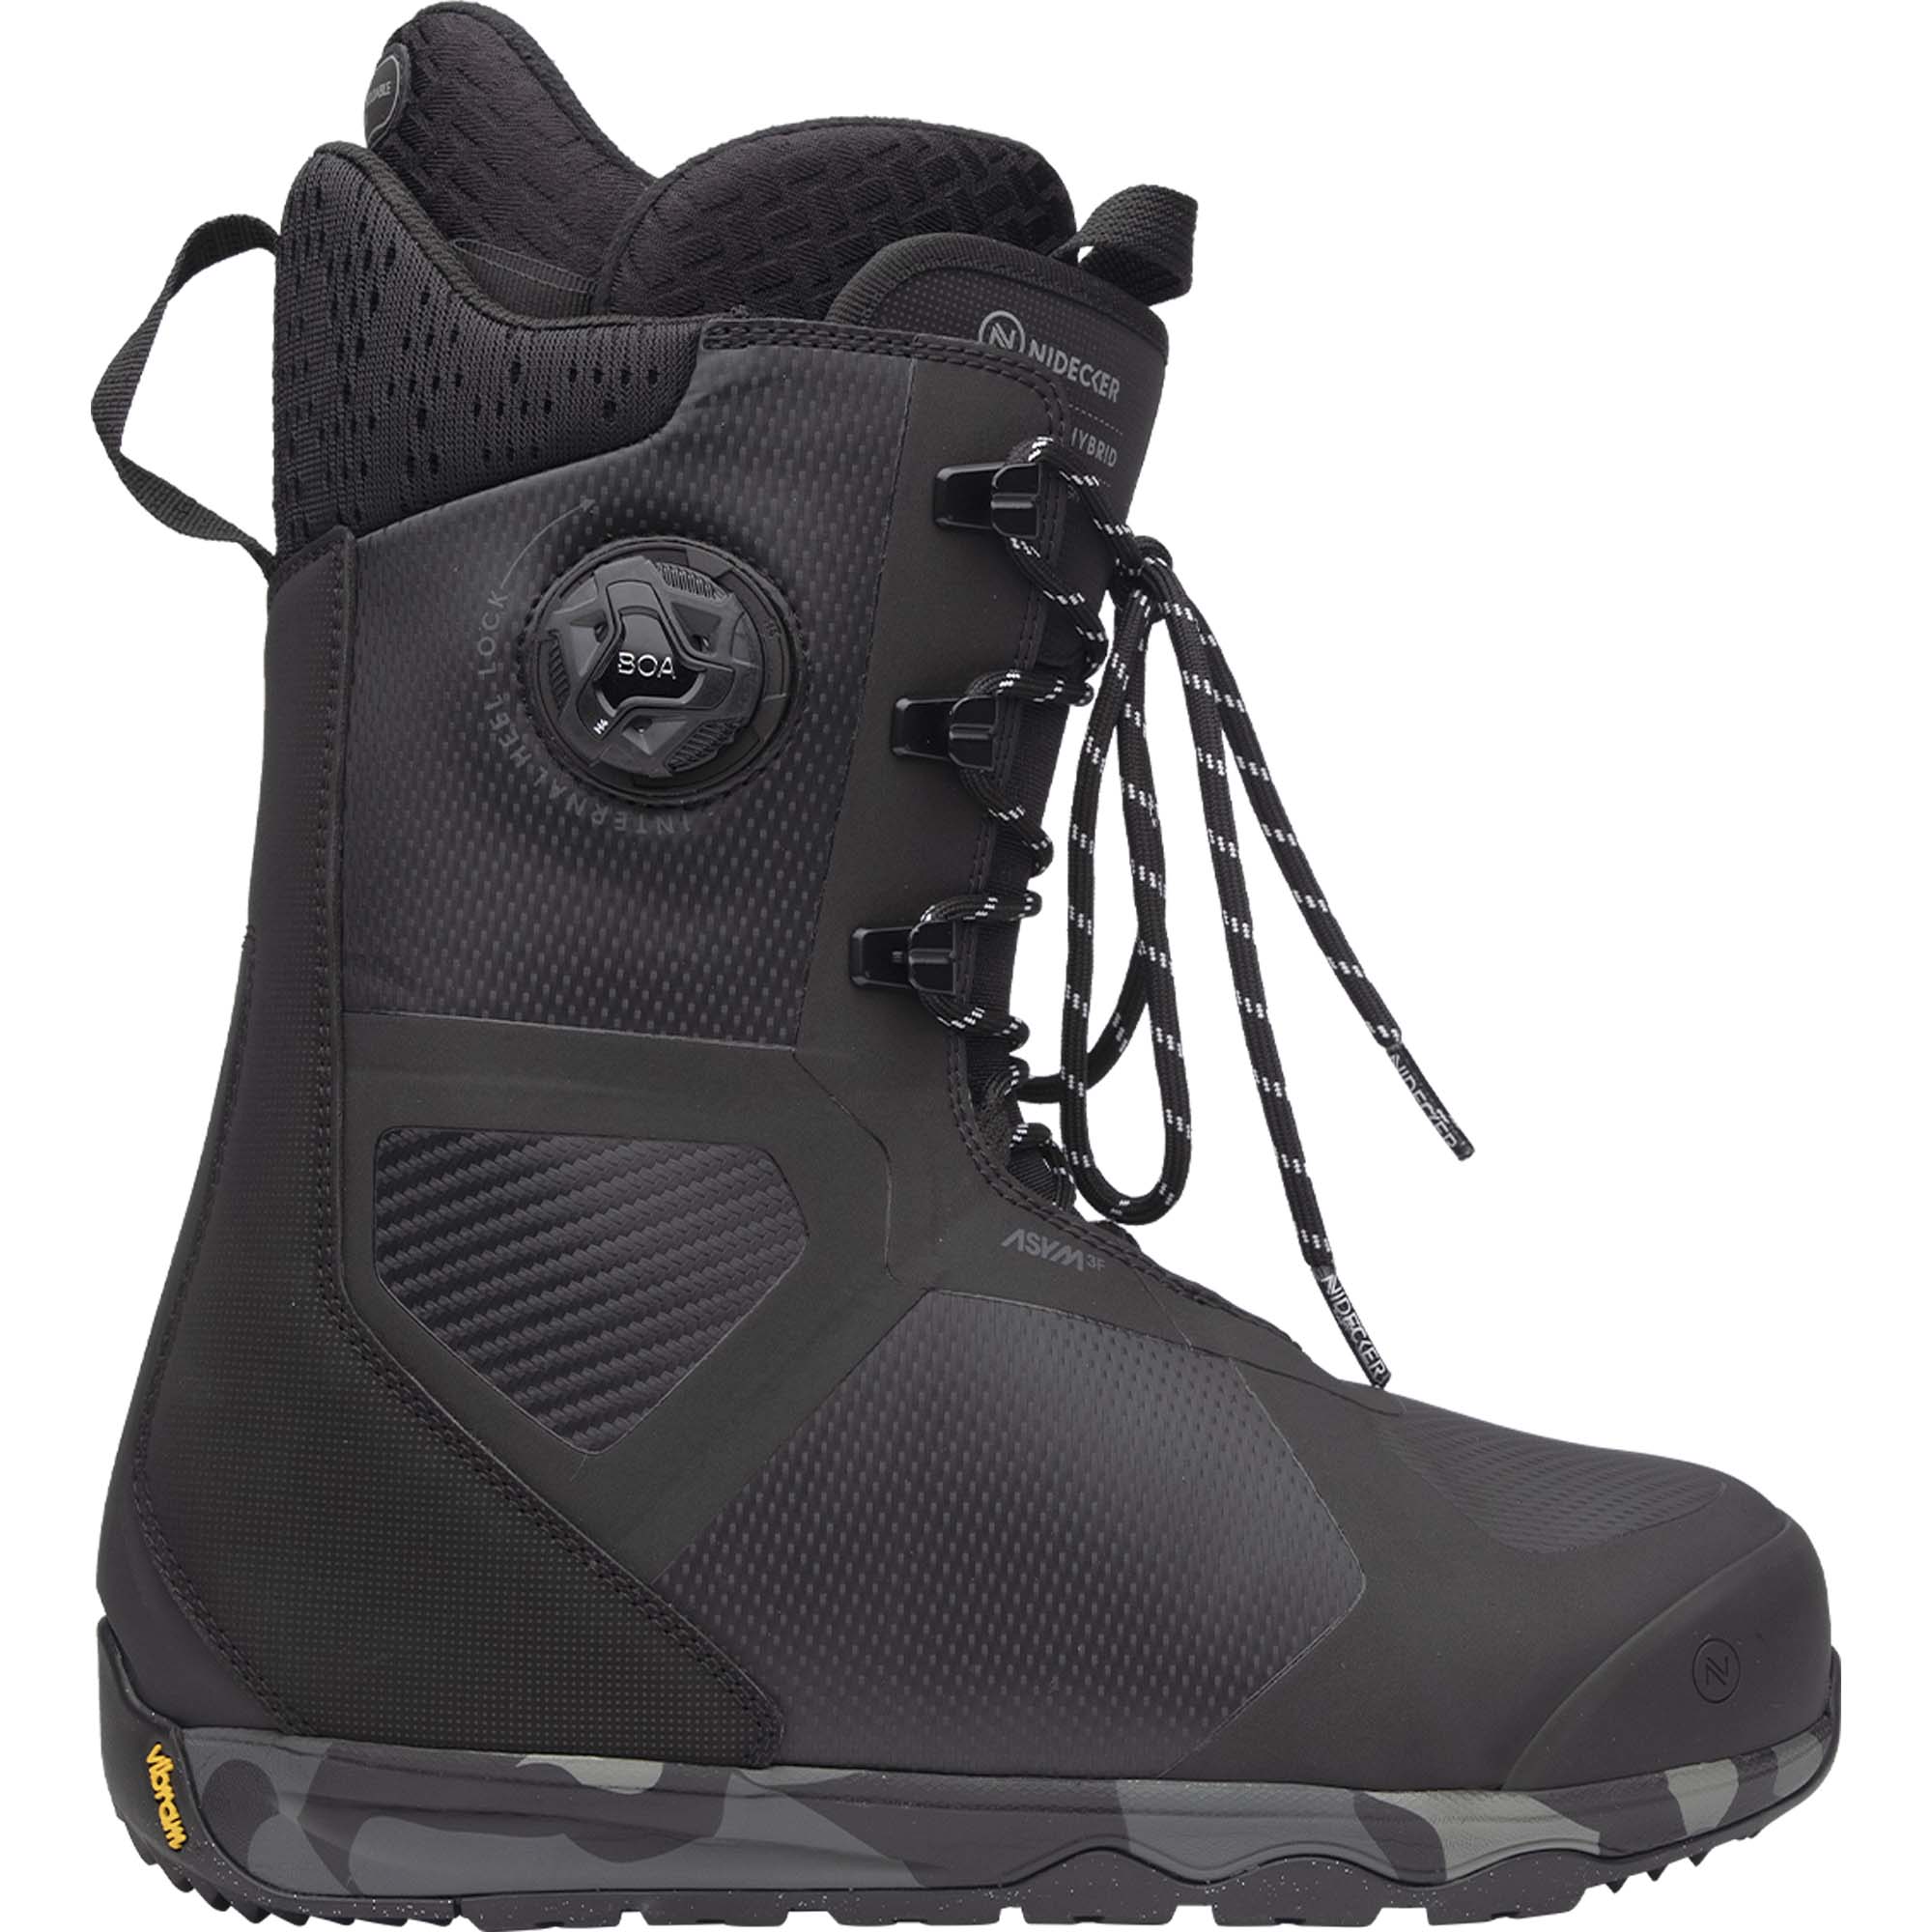 Nidecker Kita Hybrid Men's Snowboard Boots